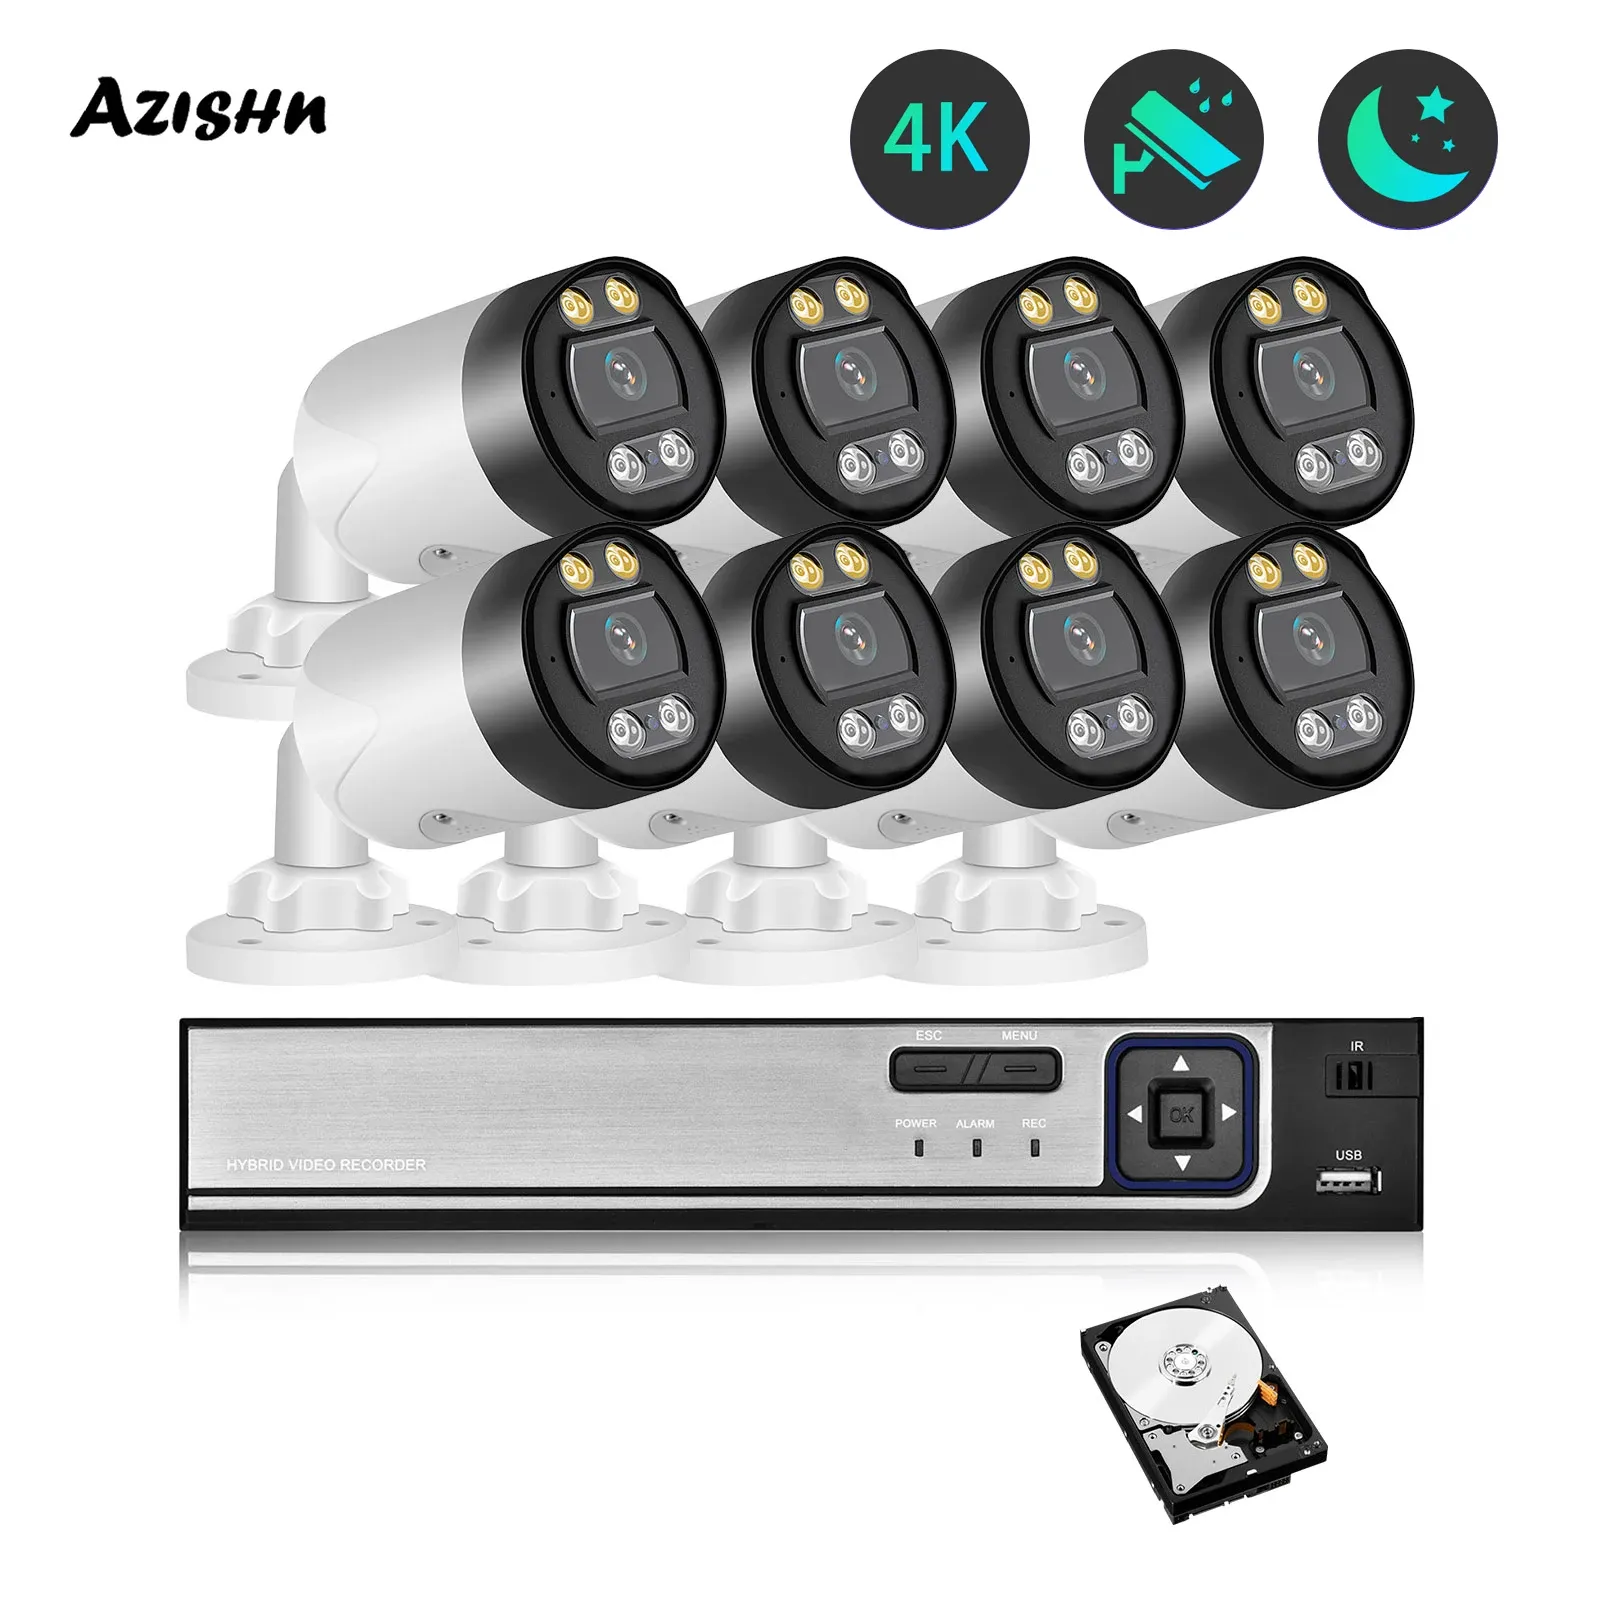 Système Azishn 8MP 4K IP Bullet Camet 8ch NVR CCTV System Kit extérieur imperméable